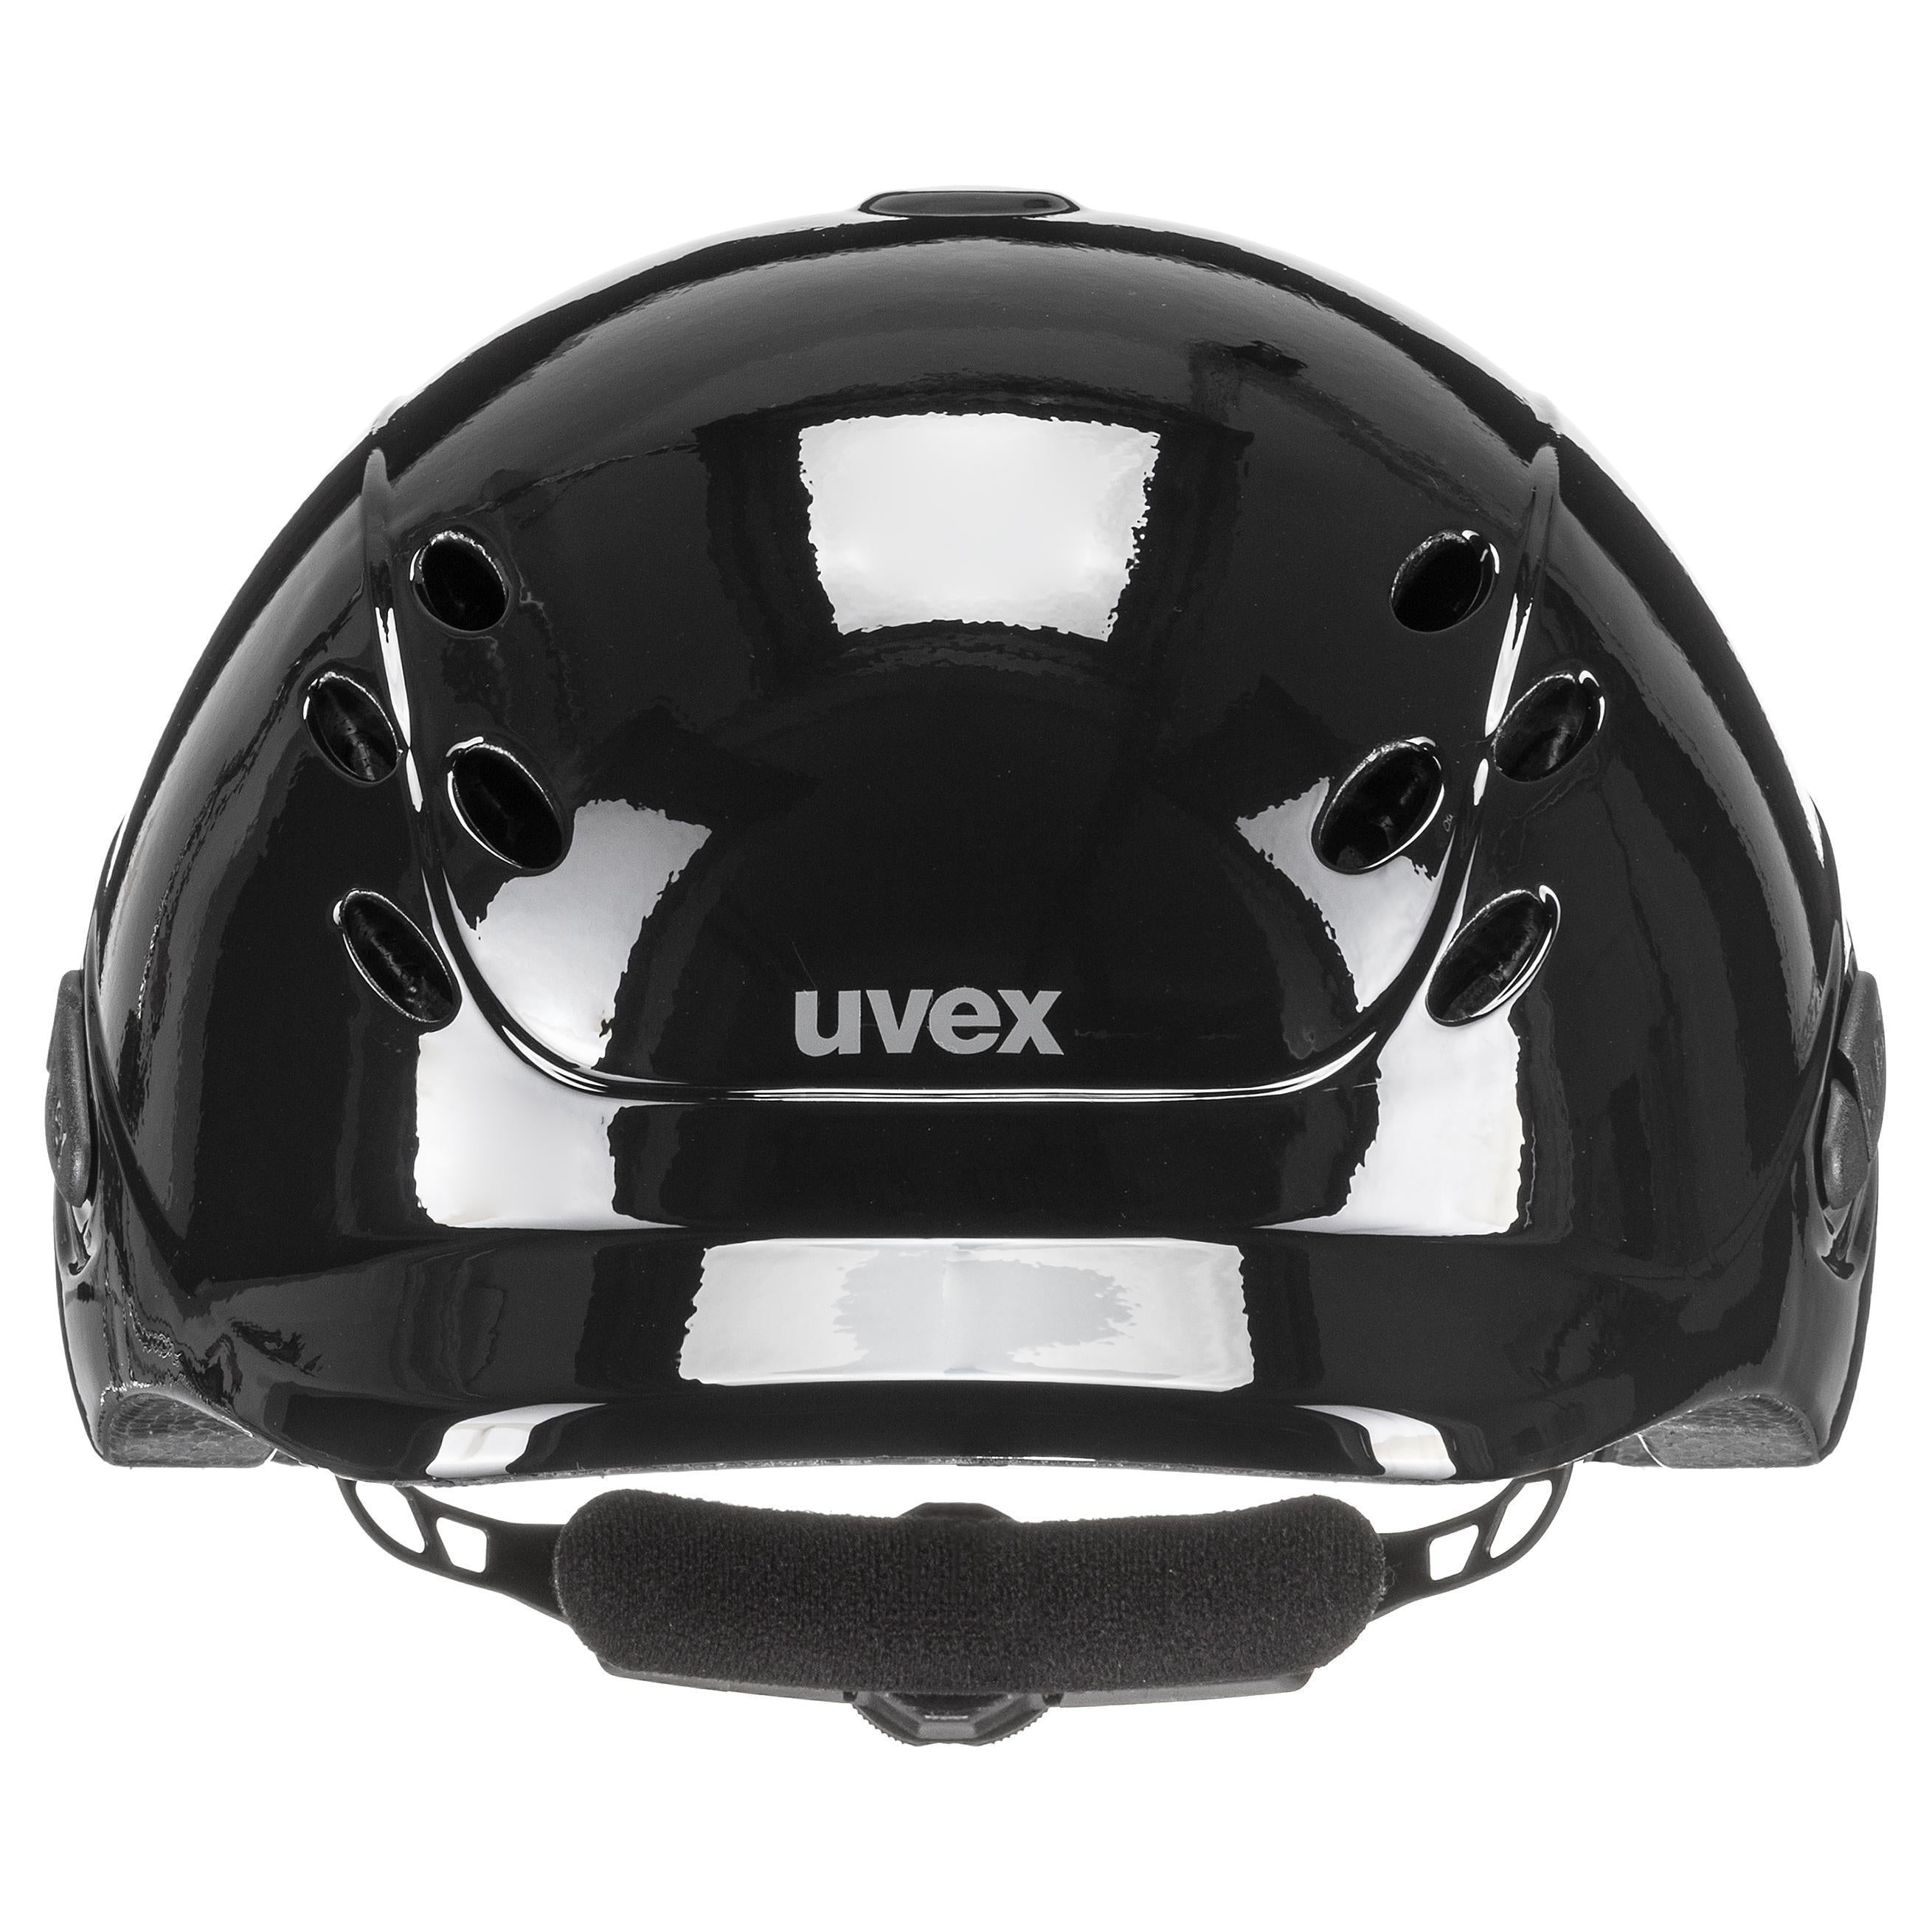 Uvex Adjustable Children's Riding Hat size 49-54 cm onyxx plain black shiny (NEW)